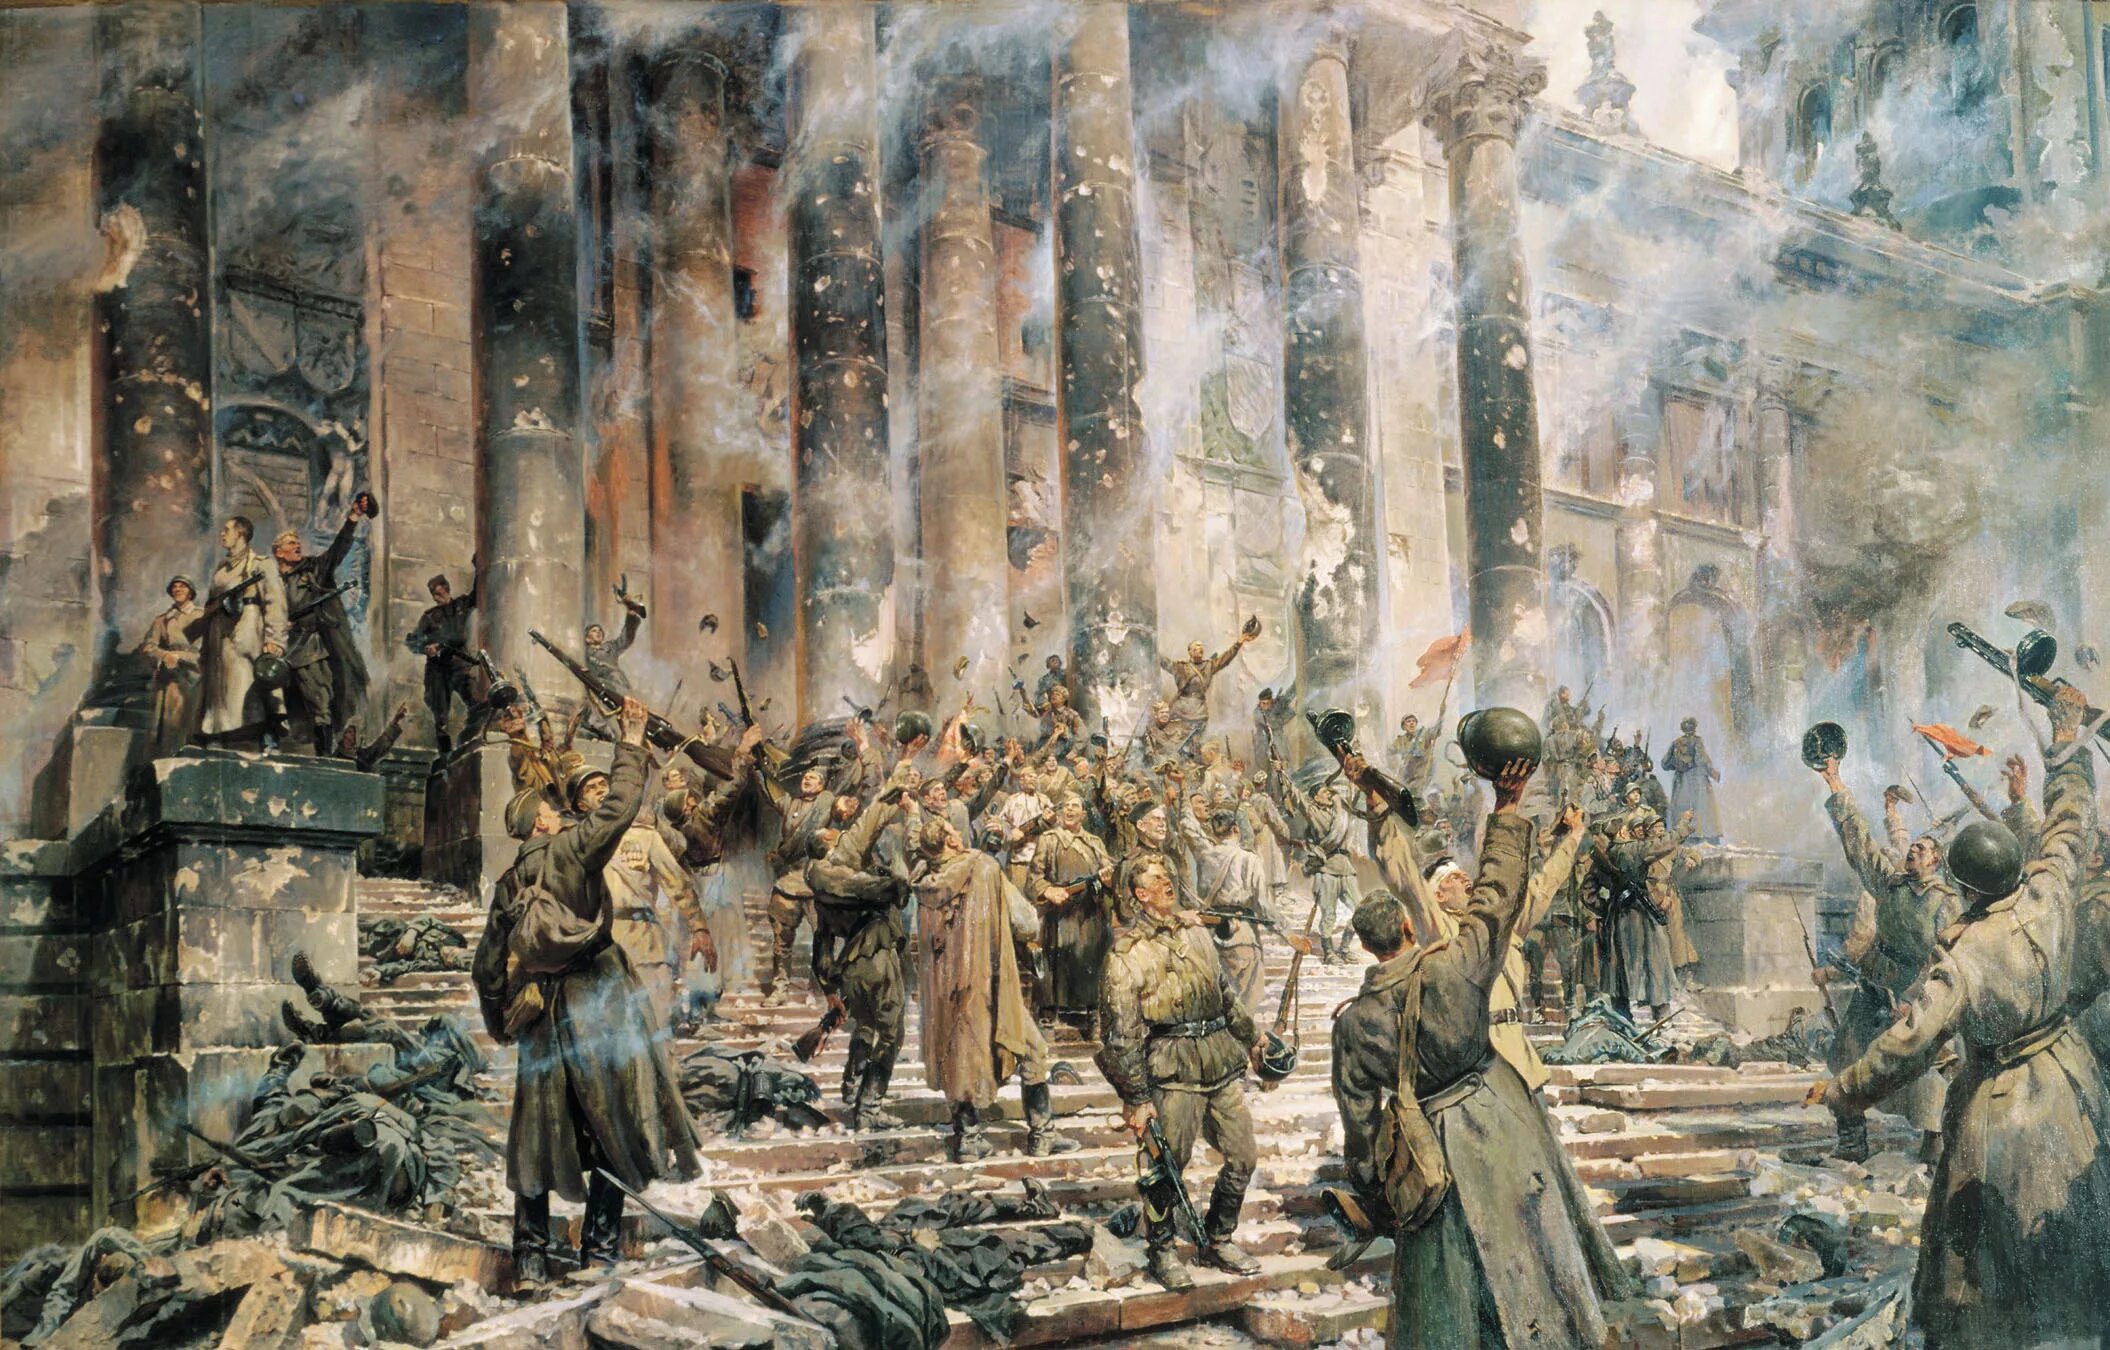 9 мая день победы солдаты. Кривоногов победа картина.